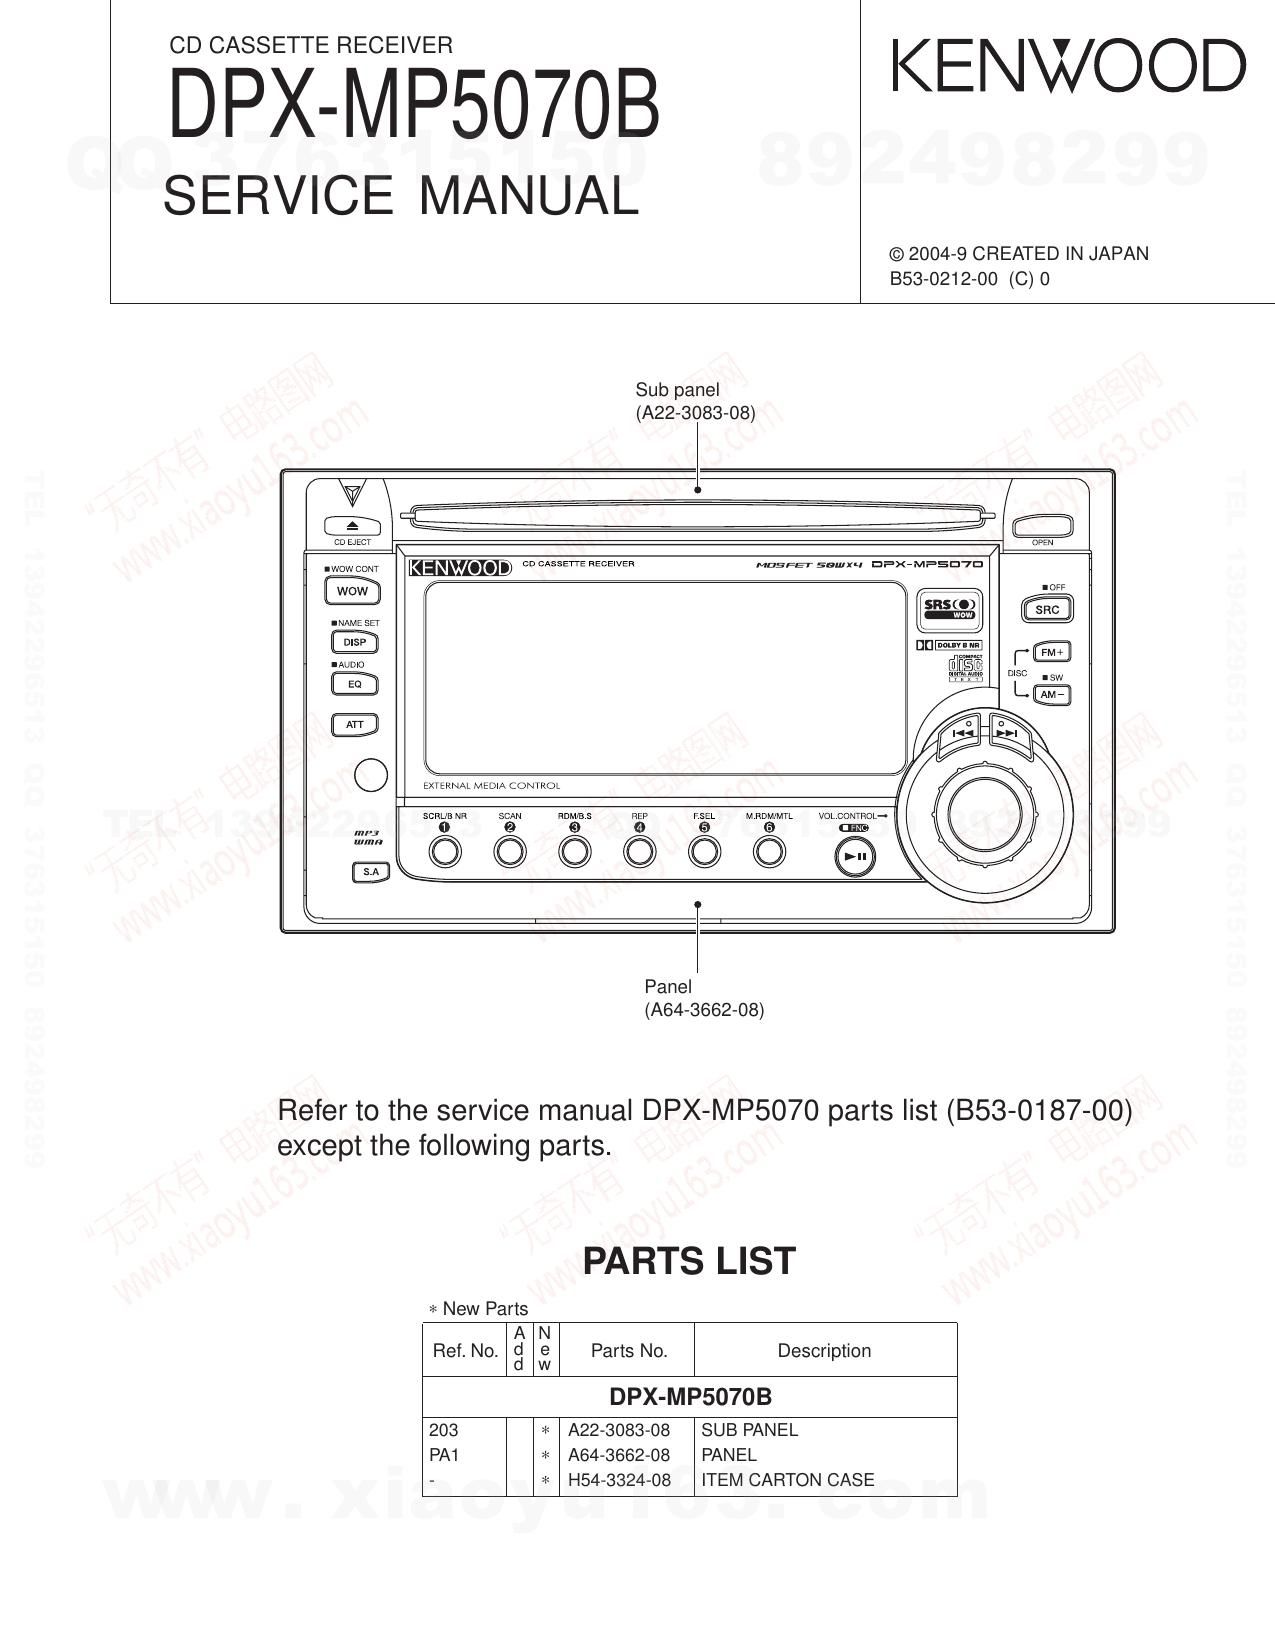 Kenwood DPXMP 5070 B Service Manual